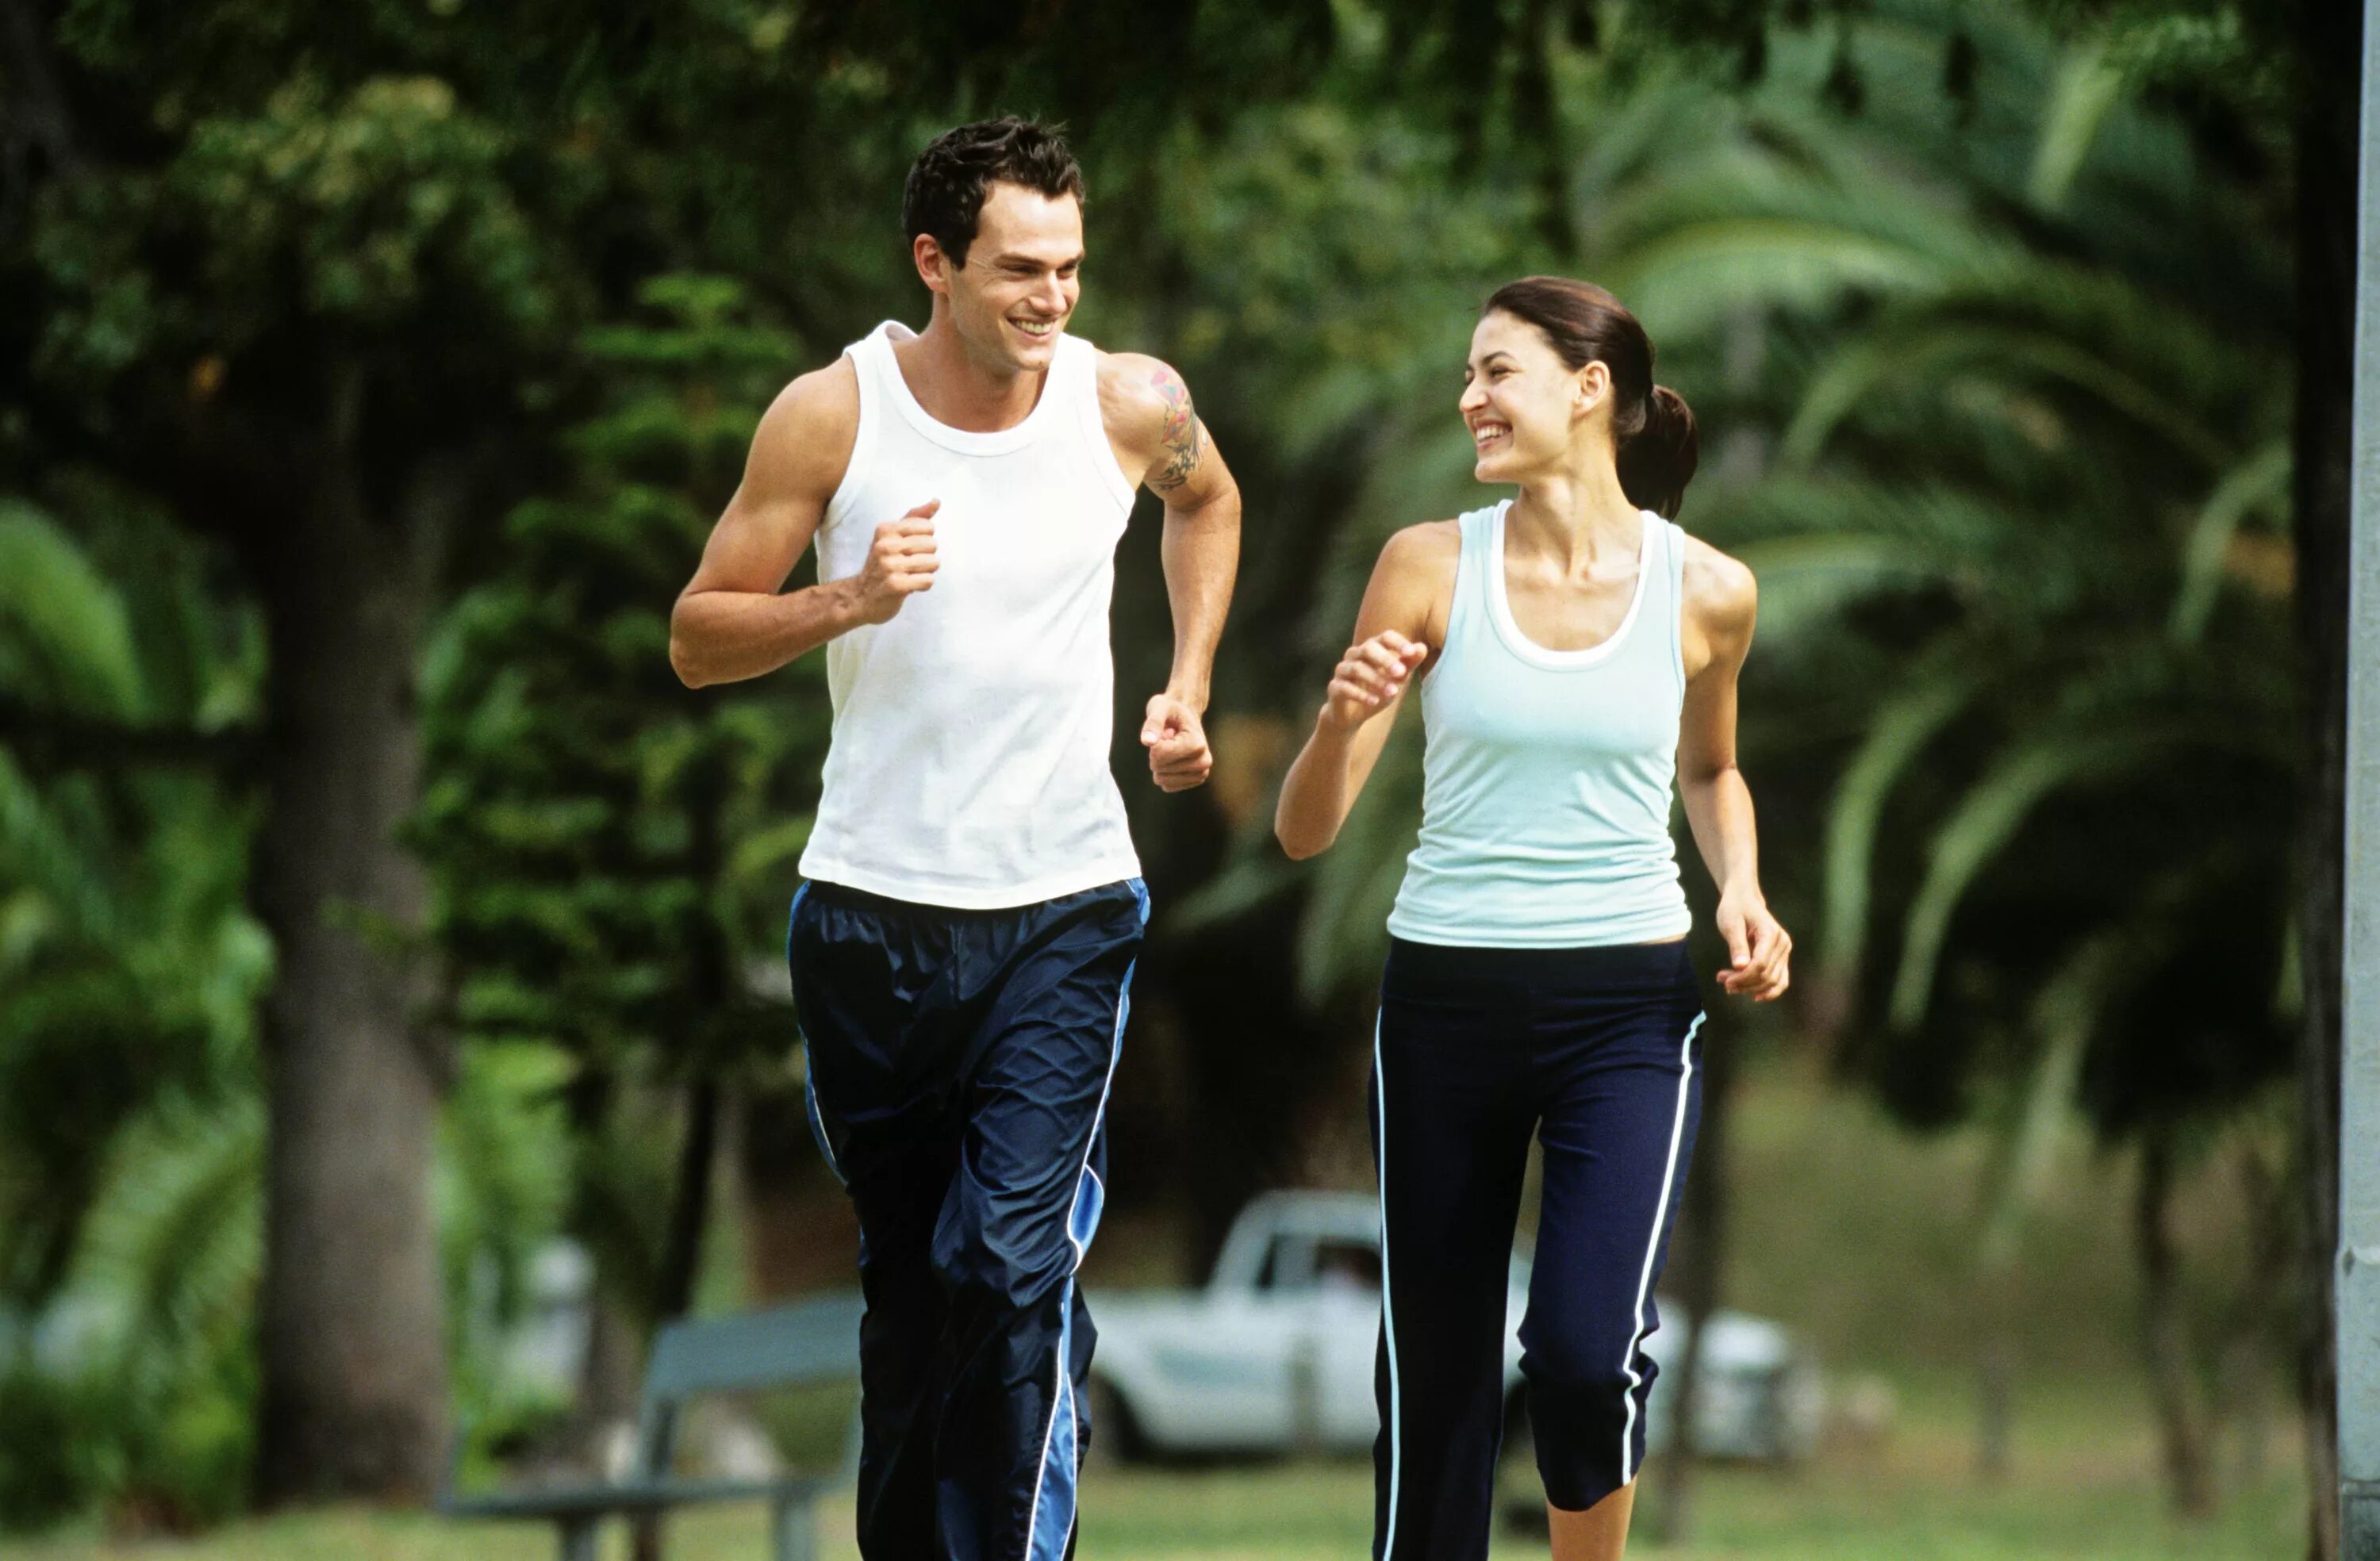 Украду бегу. Мужчина и женщина бегают. Мужчина и женщина на пробежке. Спортивные люди. Мужчина активный образ жизни.